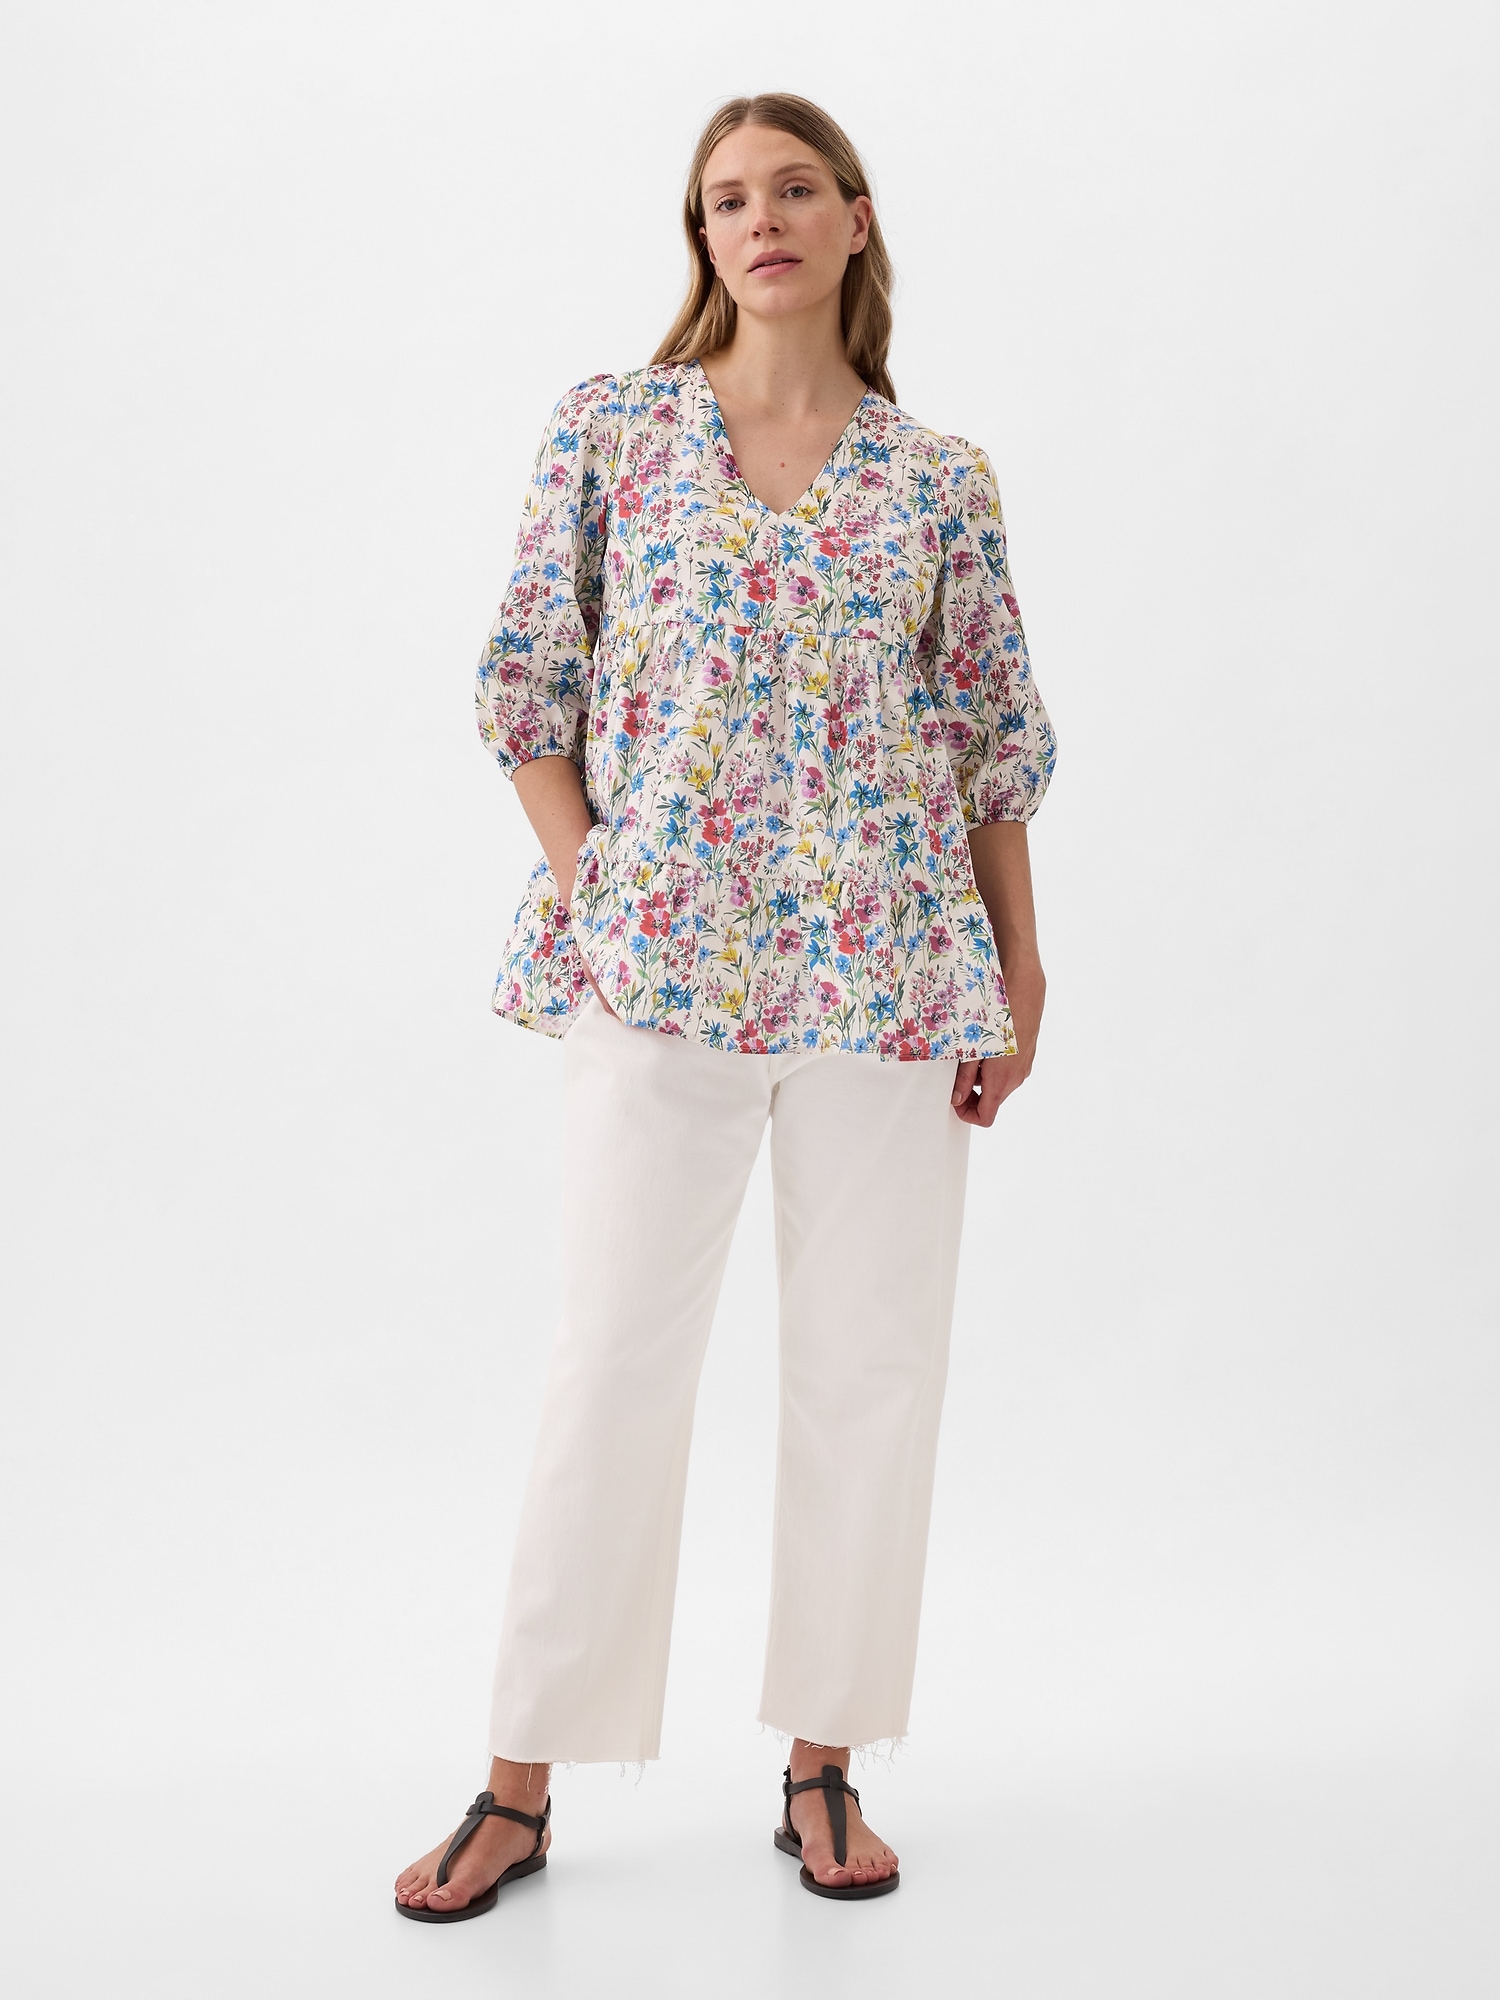 GAP Womens Fleece Mockneck Tunic Shirt, Lilac Surge, X-Small US at